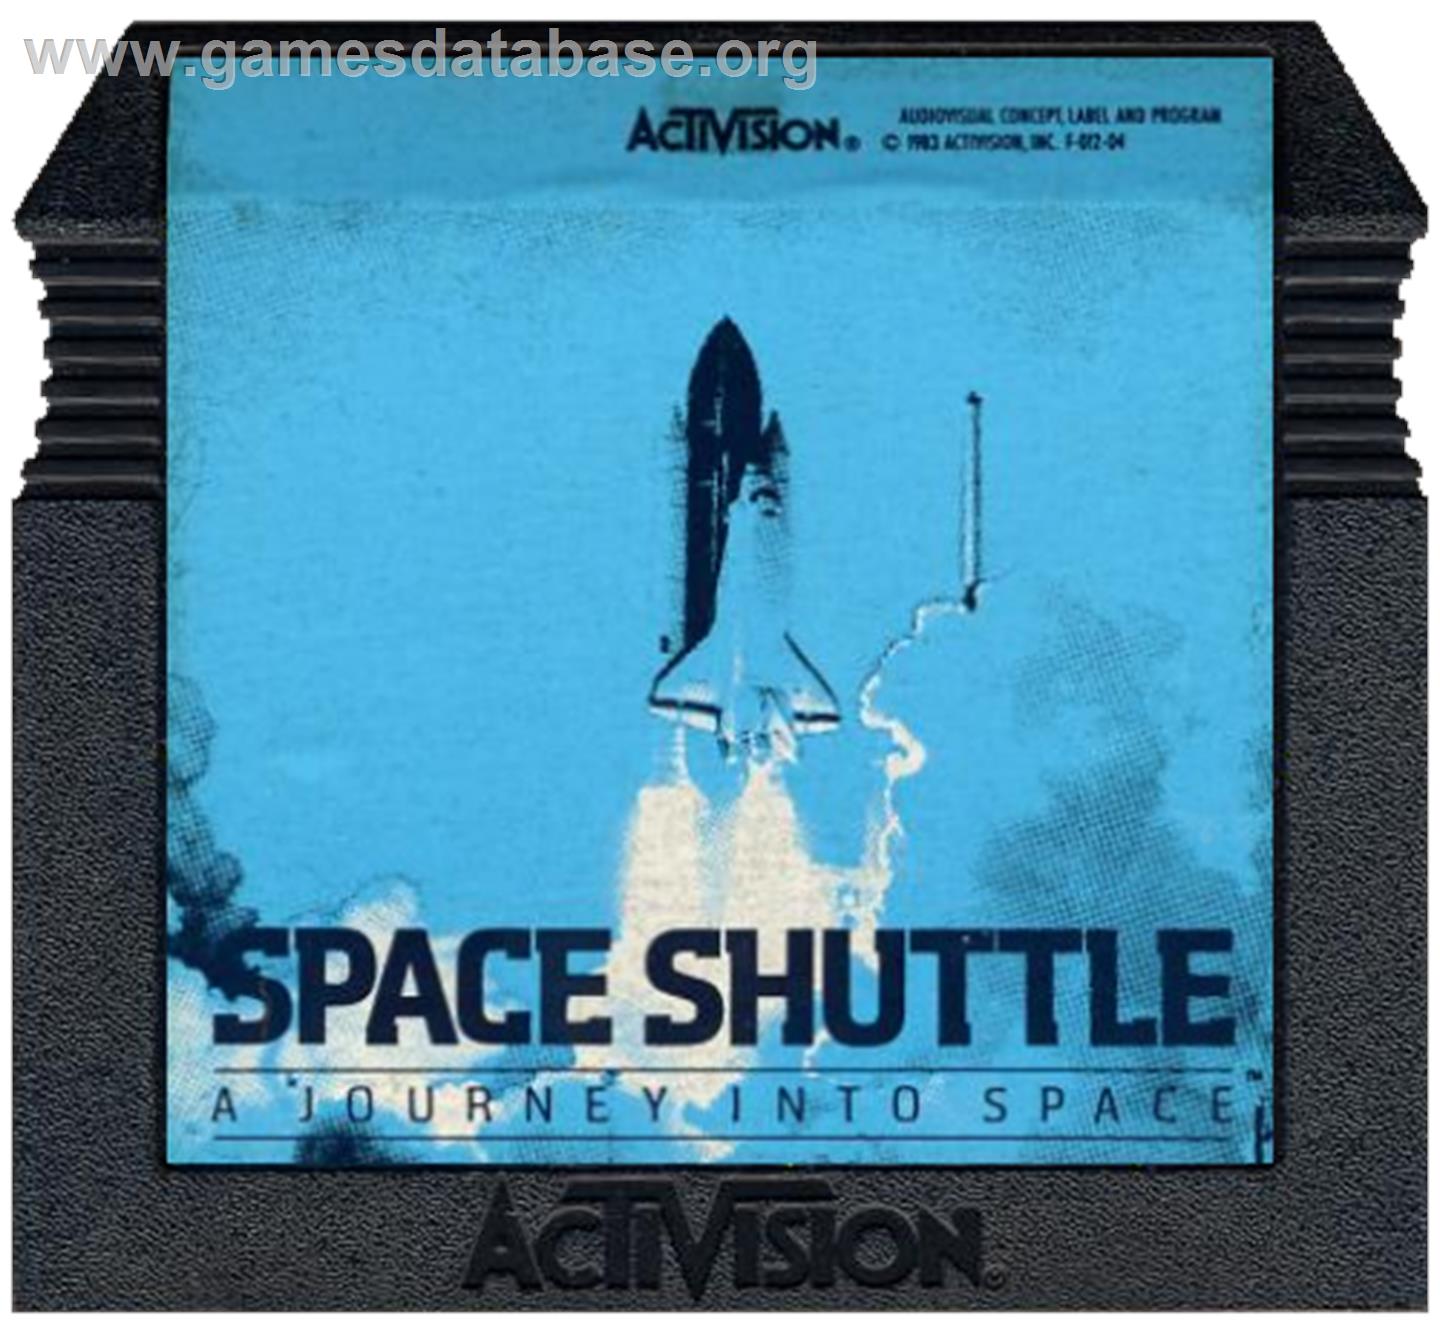 Space Shuttle: A Journey into Space - Atari 5200 - Artwork - Cartridge